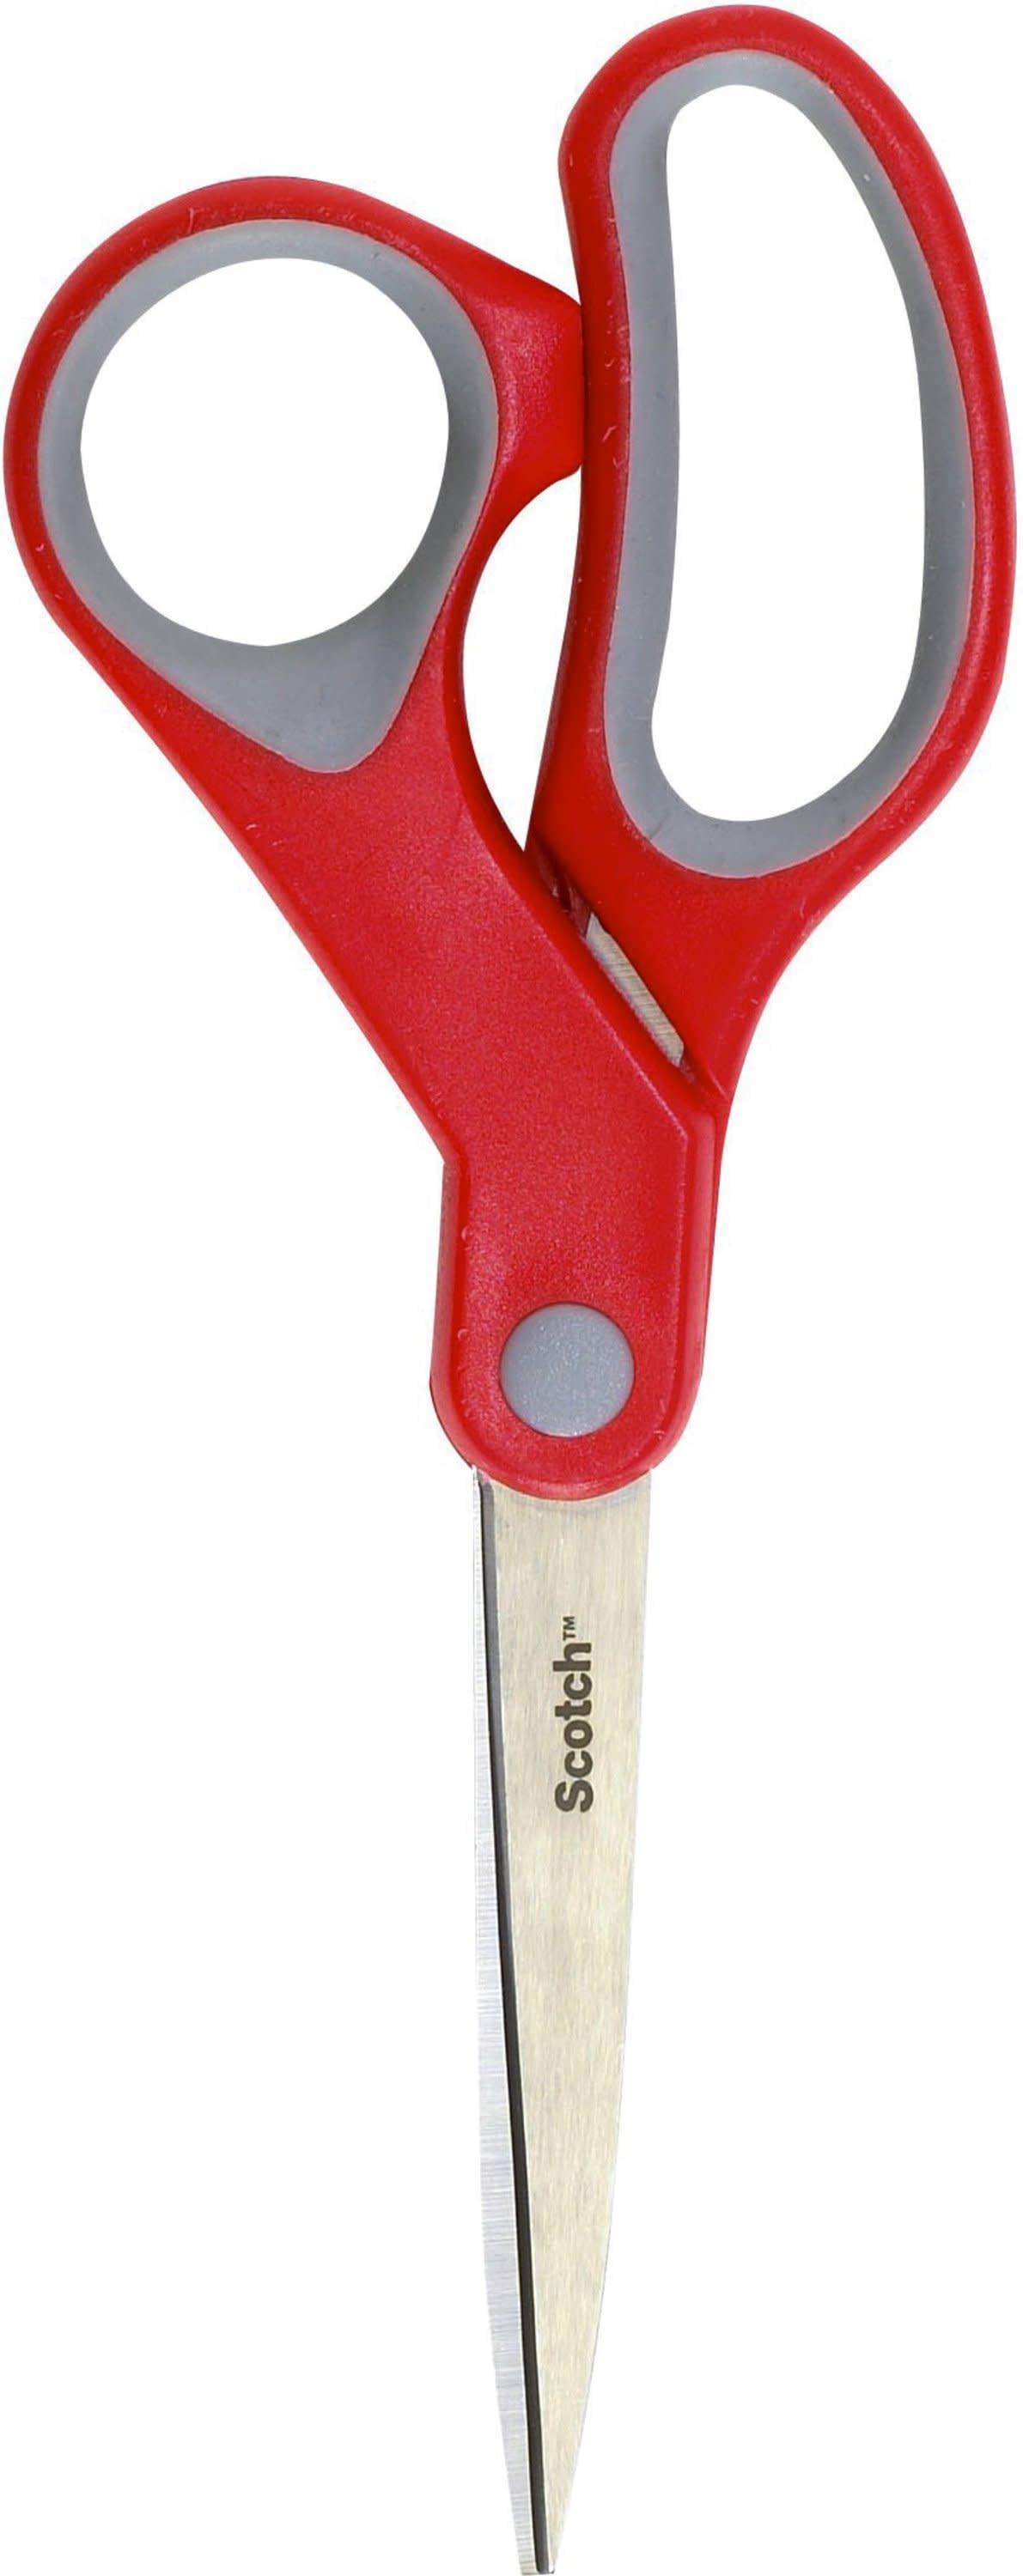  Stanley 8 Inch All-Purpose Ergonomic Scissor, Pack of 2  (SCI8EST-2PK), Assorted Colors : Tools & Home Improvement